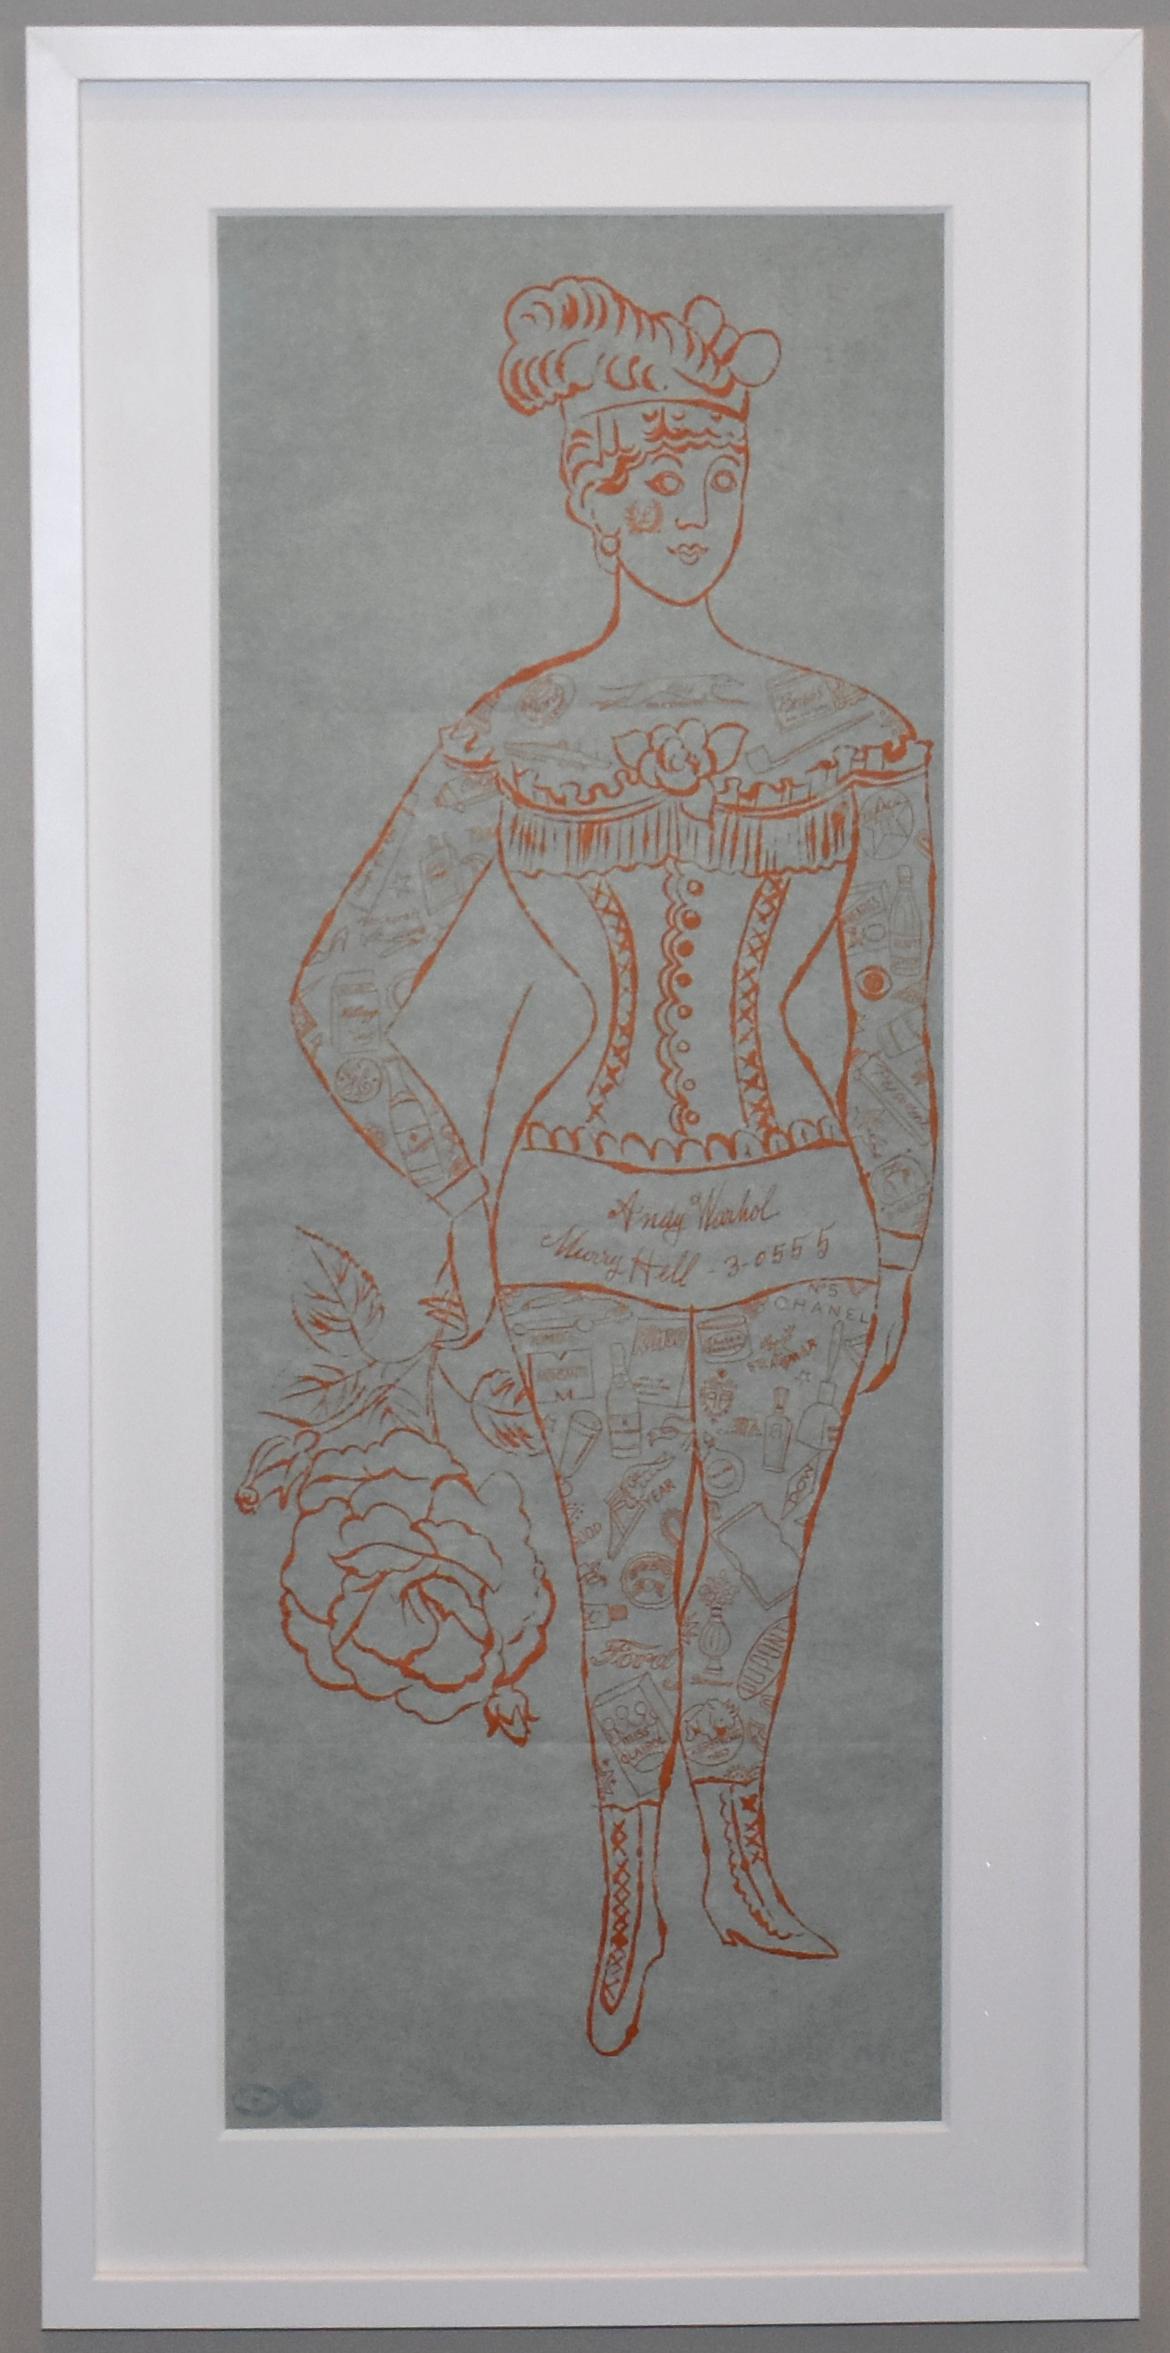 Andy Warhol Portrait Print - Tattooed Woman Holding Rose